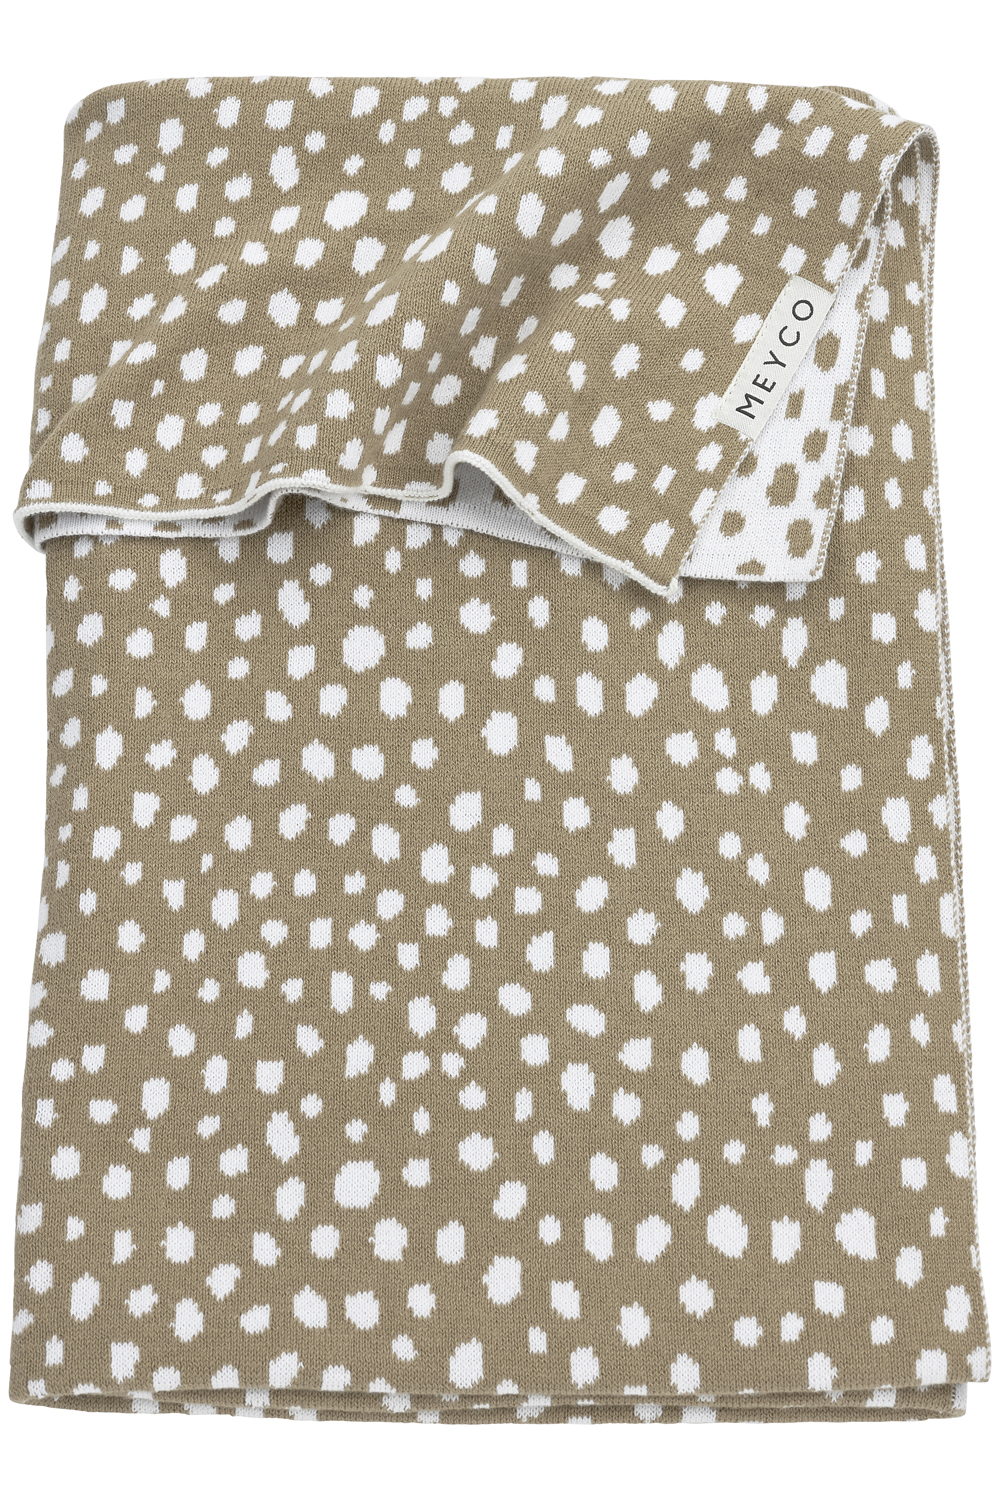 Crib blanket Cheetah - Taupe - 75x100cm